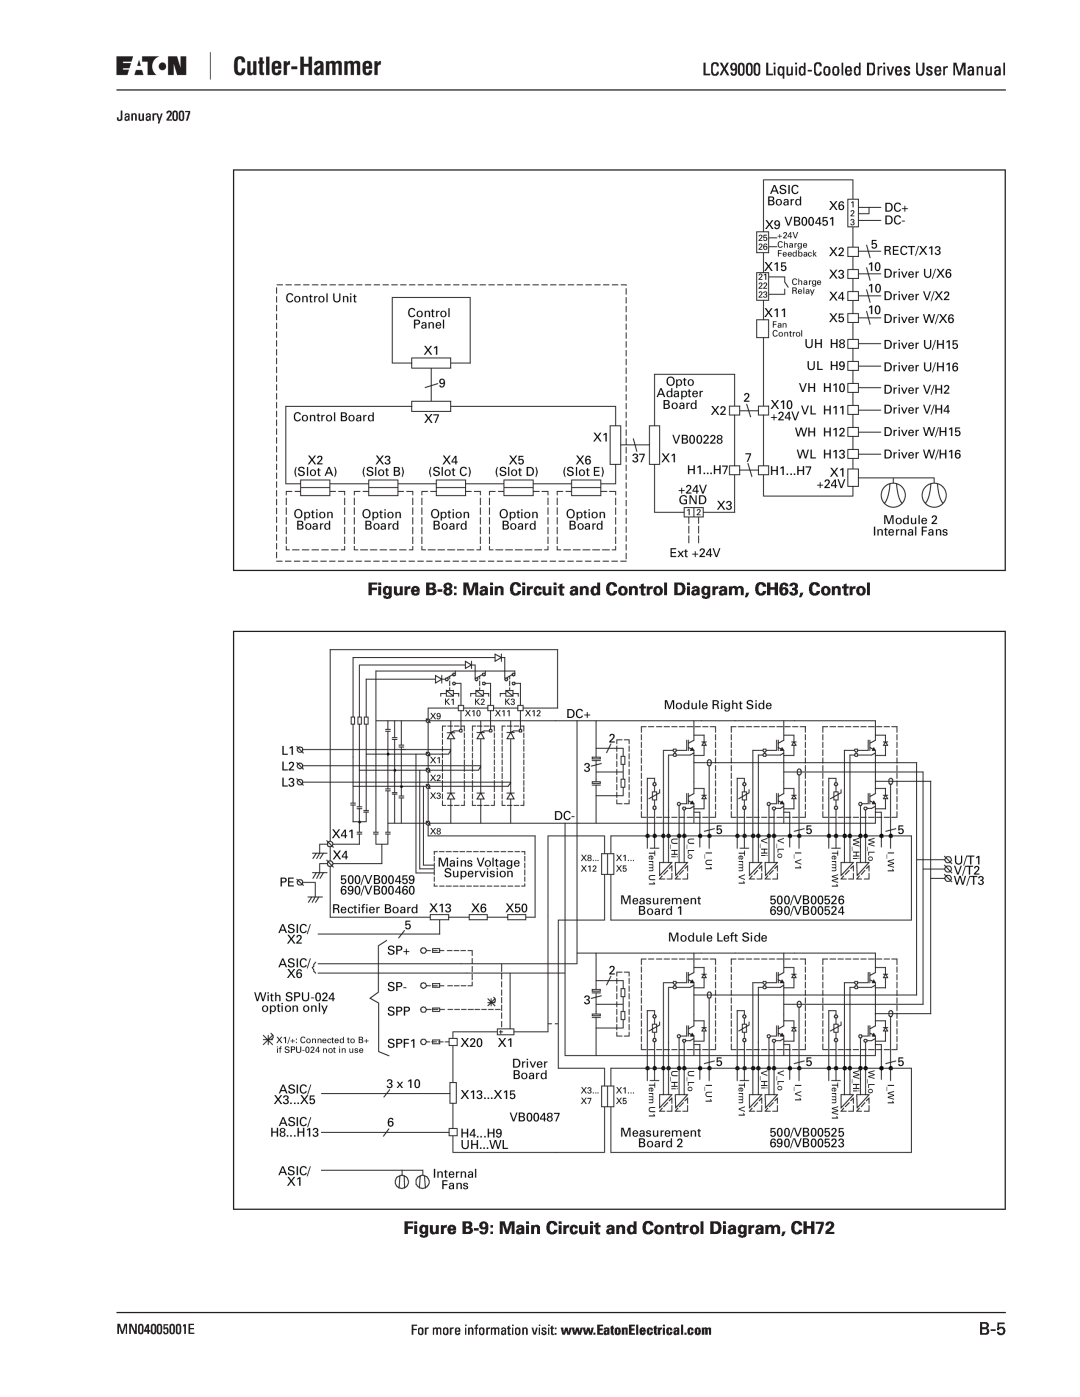 J. T. Eaton Figure B-8 Main Circuit and Control Diagram, CH63, Control, LCX9000 Liquid-Cooled Drives User Manual 